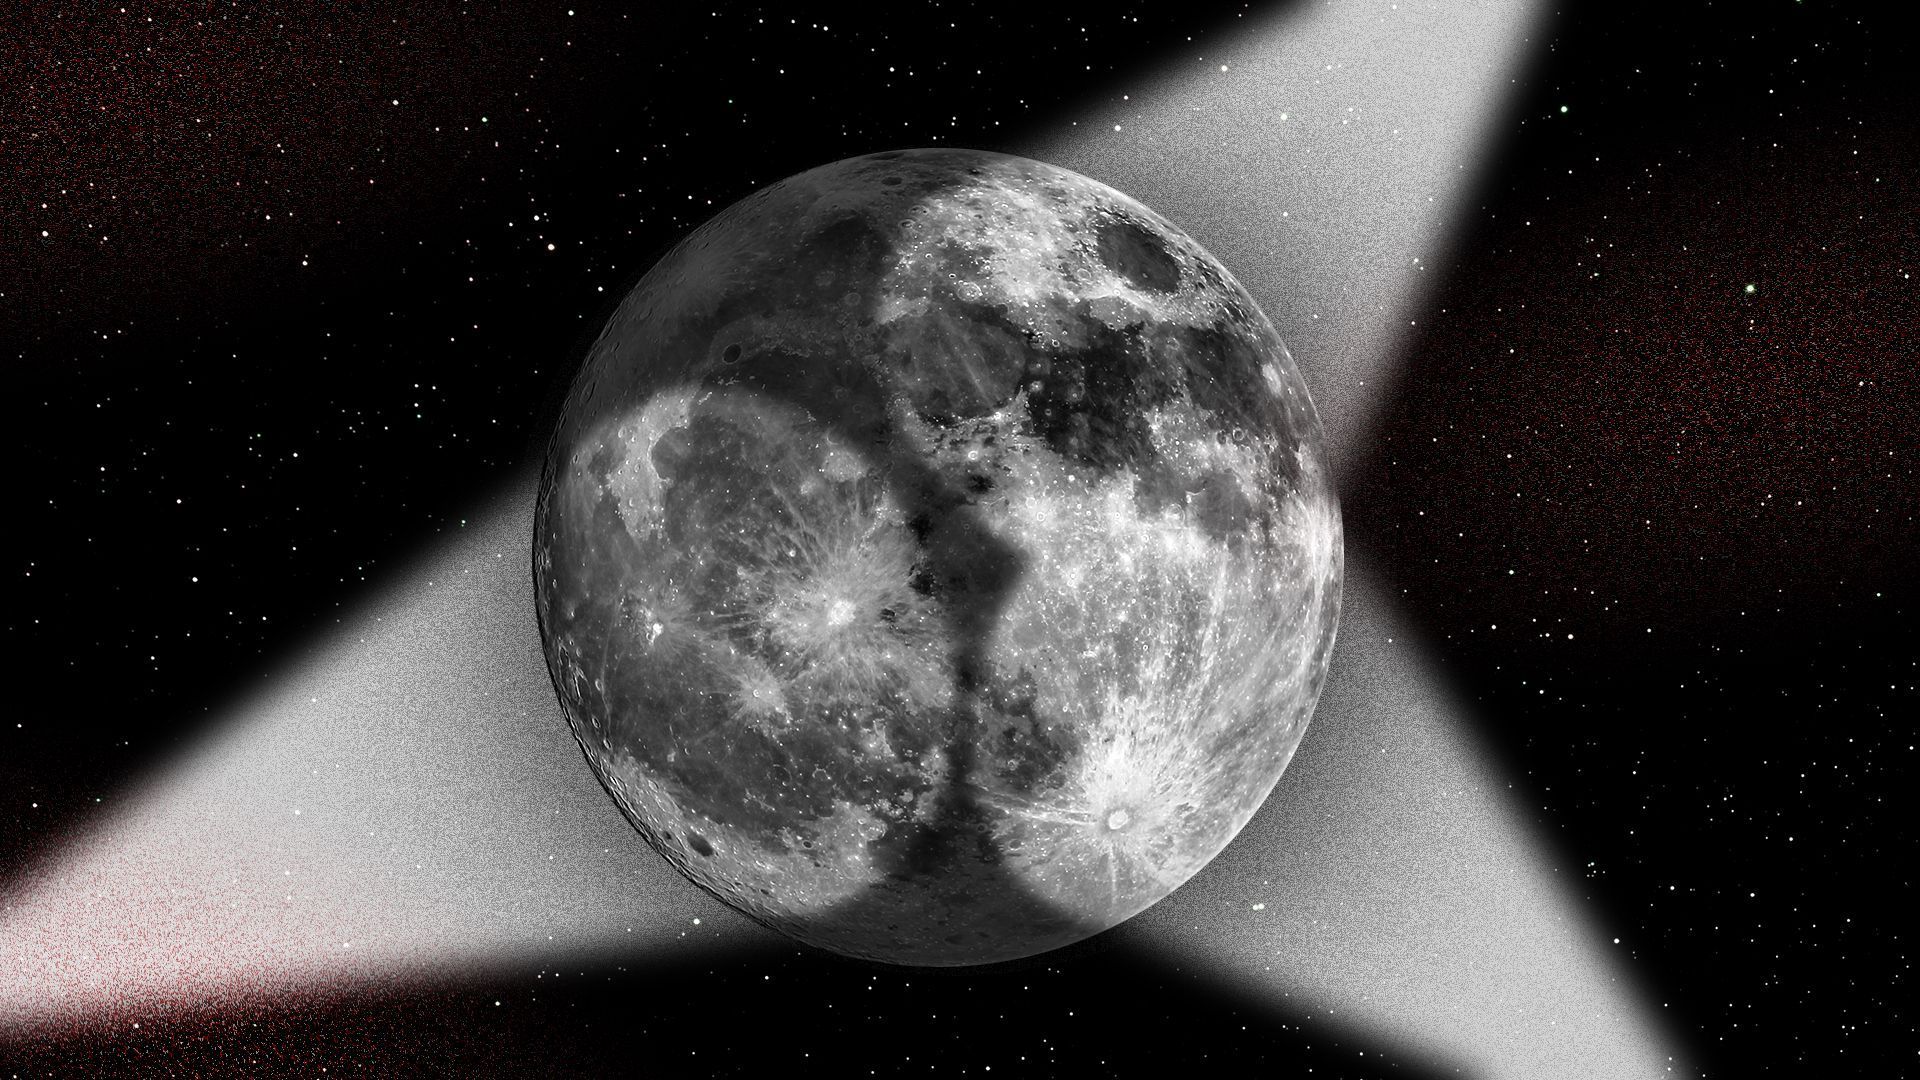 An illustration showing three spotlights shining on the moon.